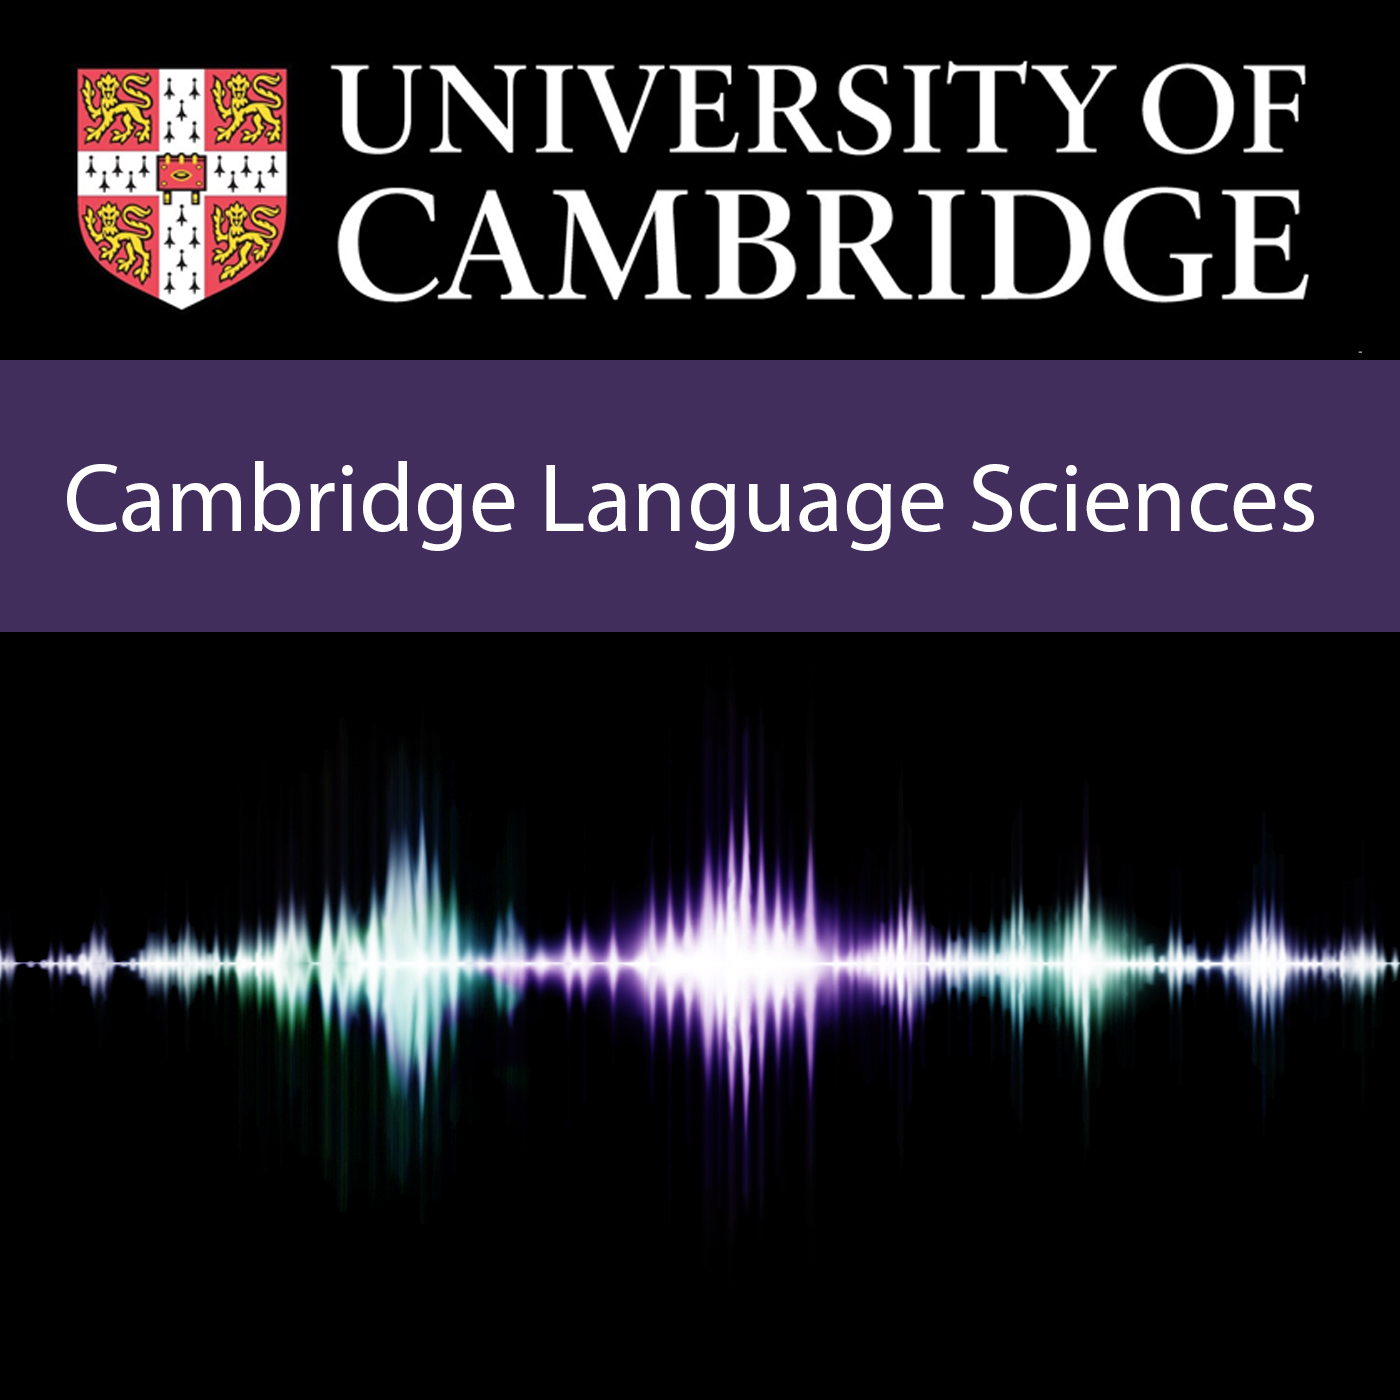 Cambridge Language Sciences's image